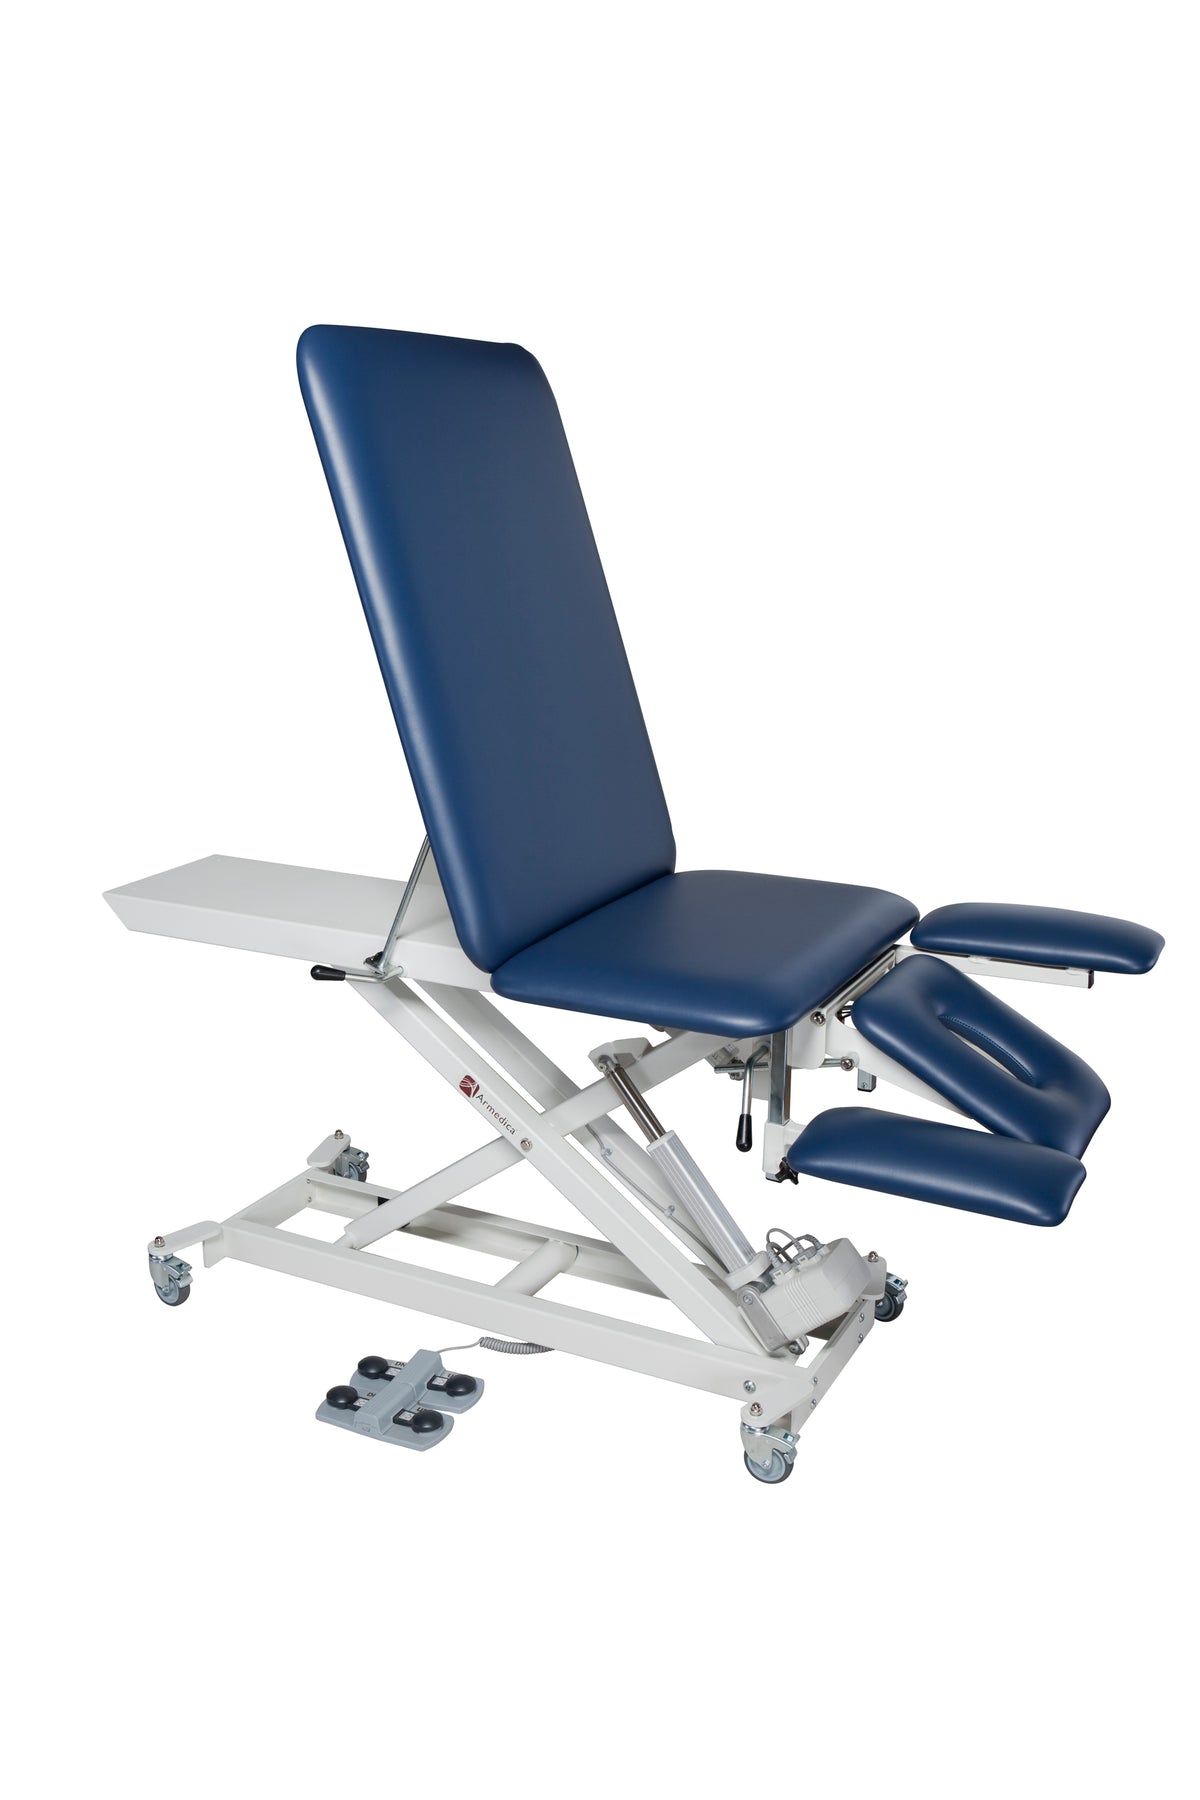 Armedica - AM-SX 5000 Treatment Table - Superb Massage Tables